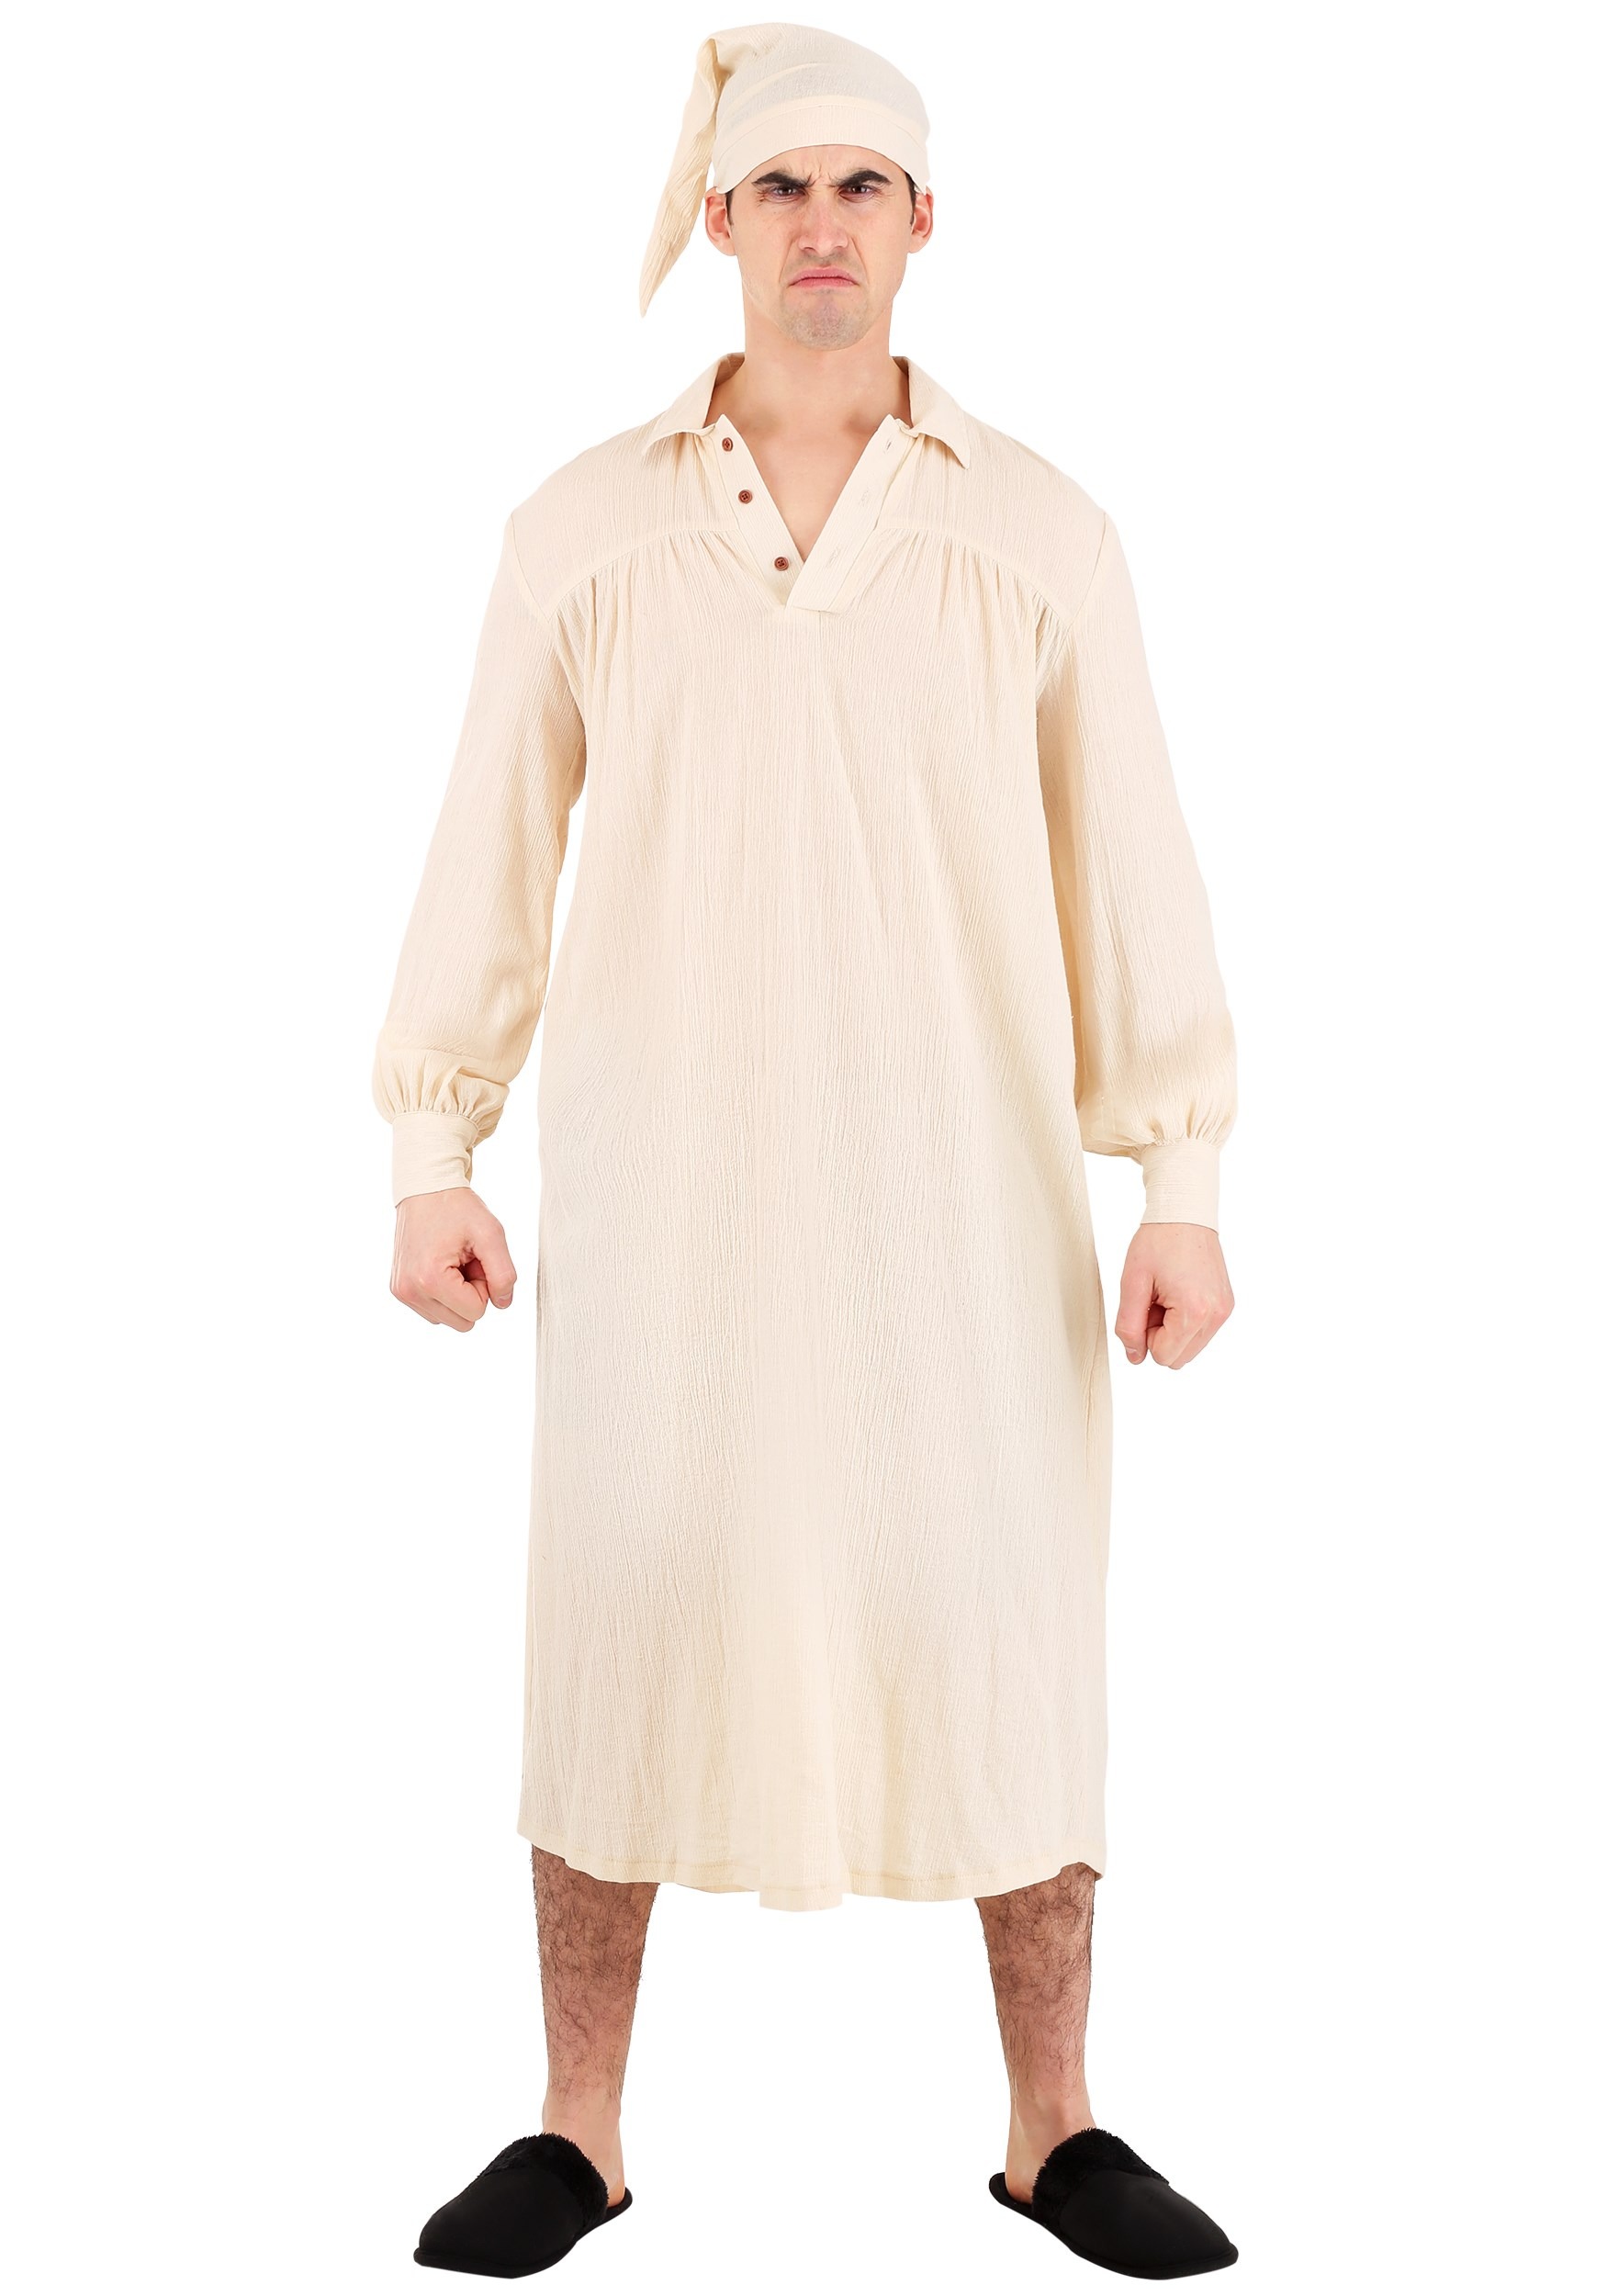 Humbug Nightgown Men's  Fancy Dress Costume